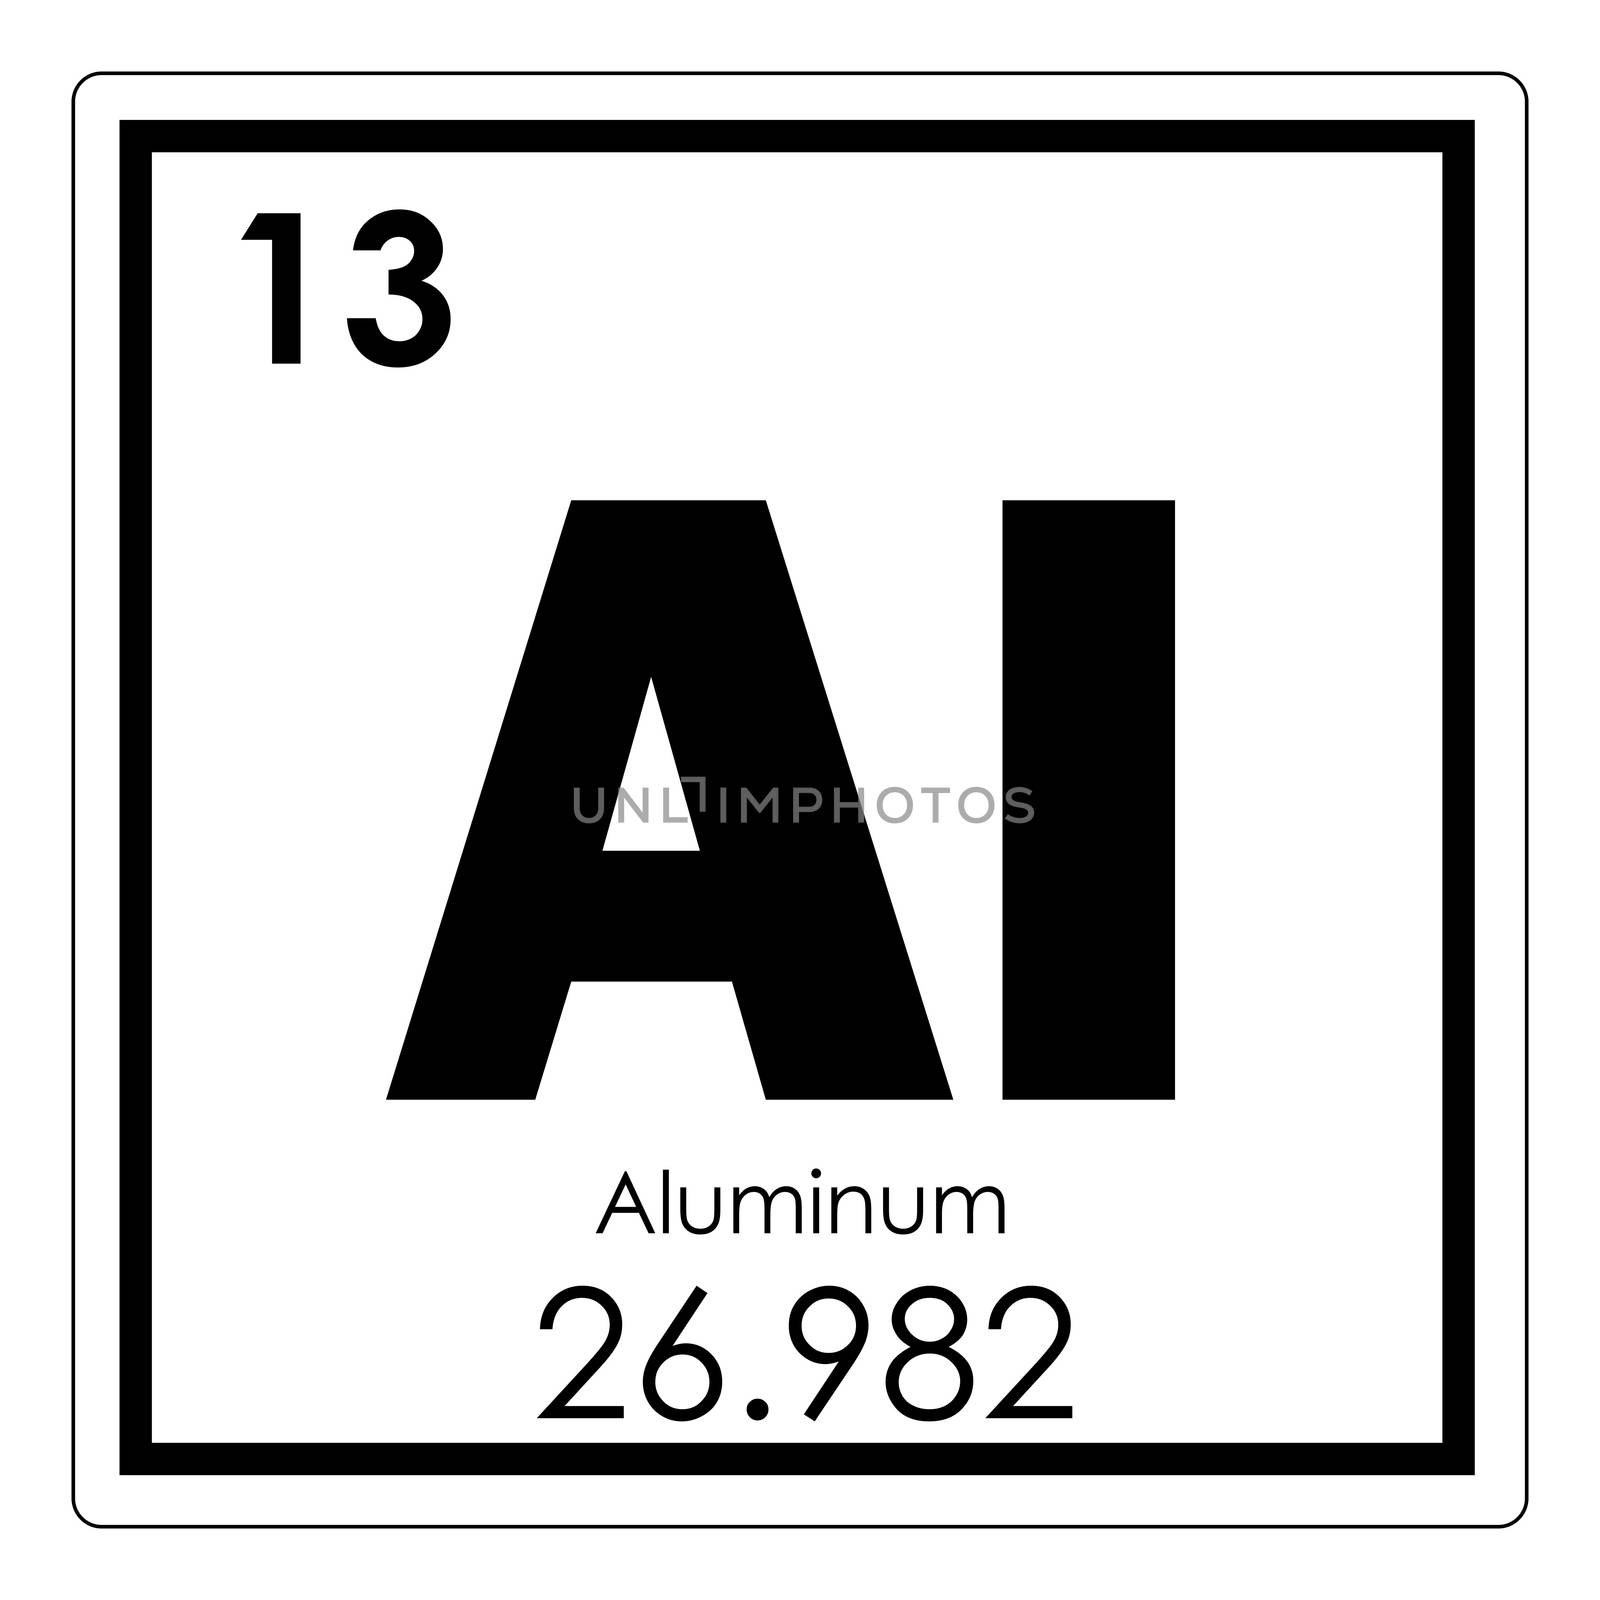 Aluminum chemical element by tony4urban